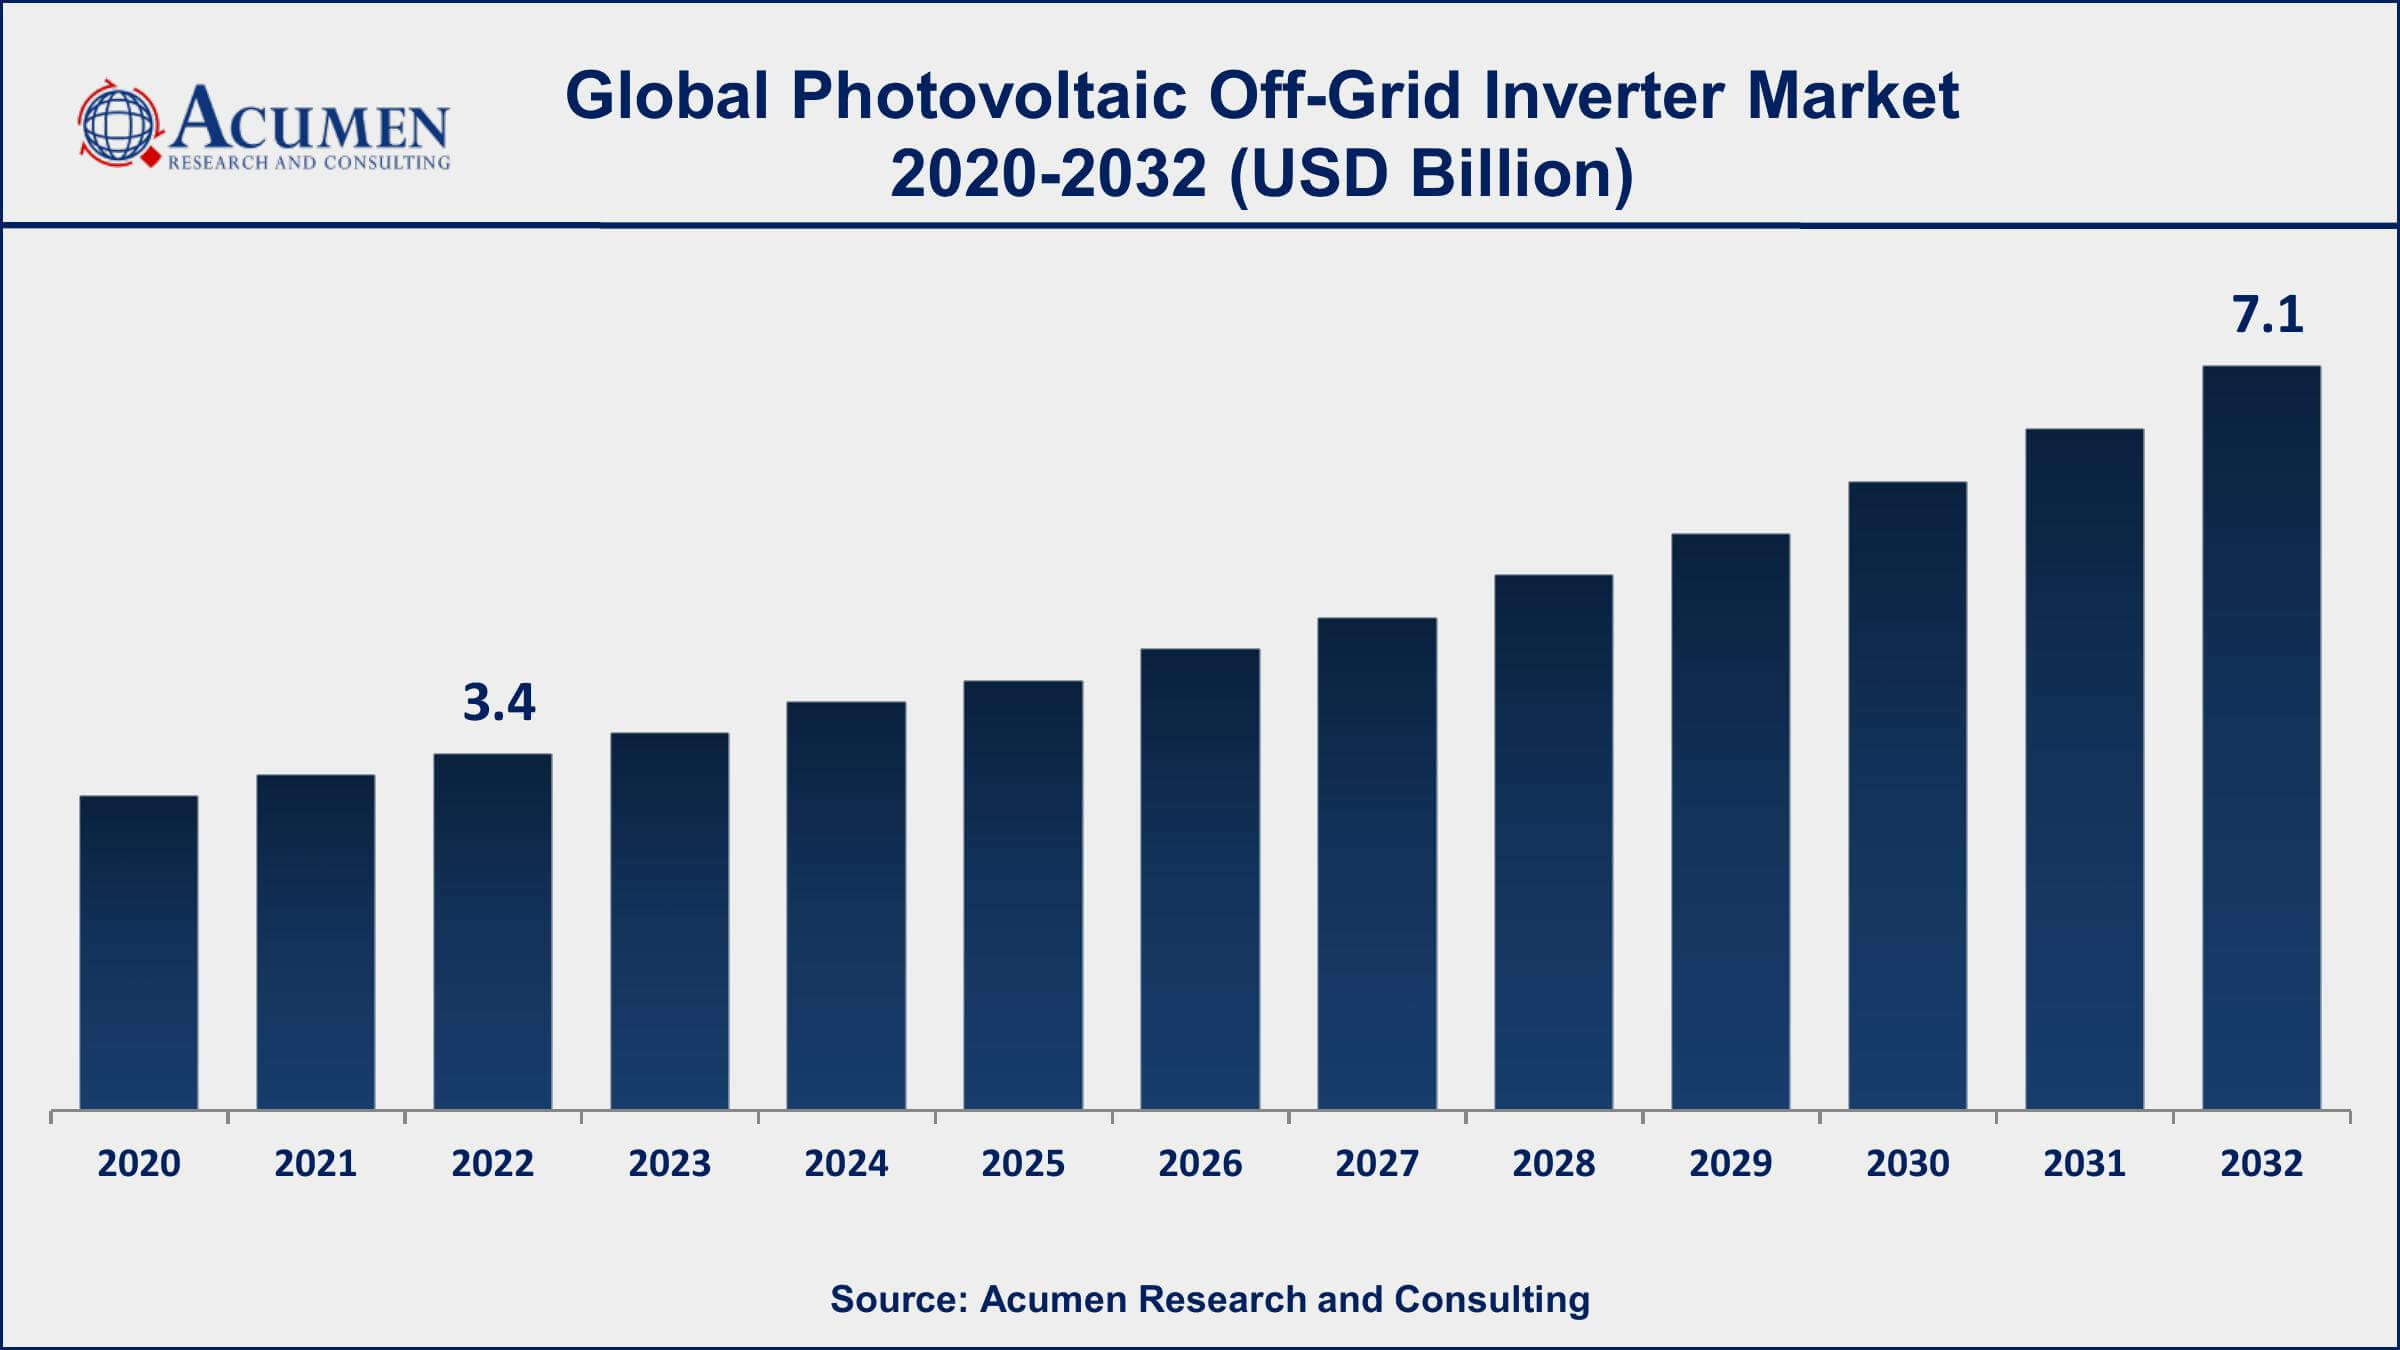 Photovoltaic Off-Grid Inverter Market Dynamics